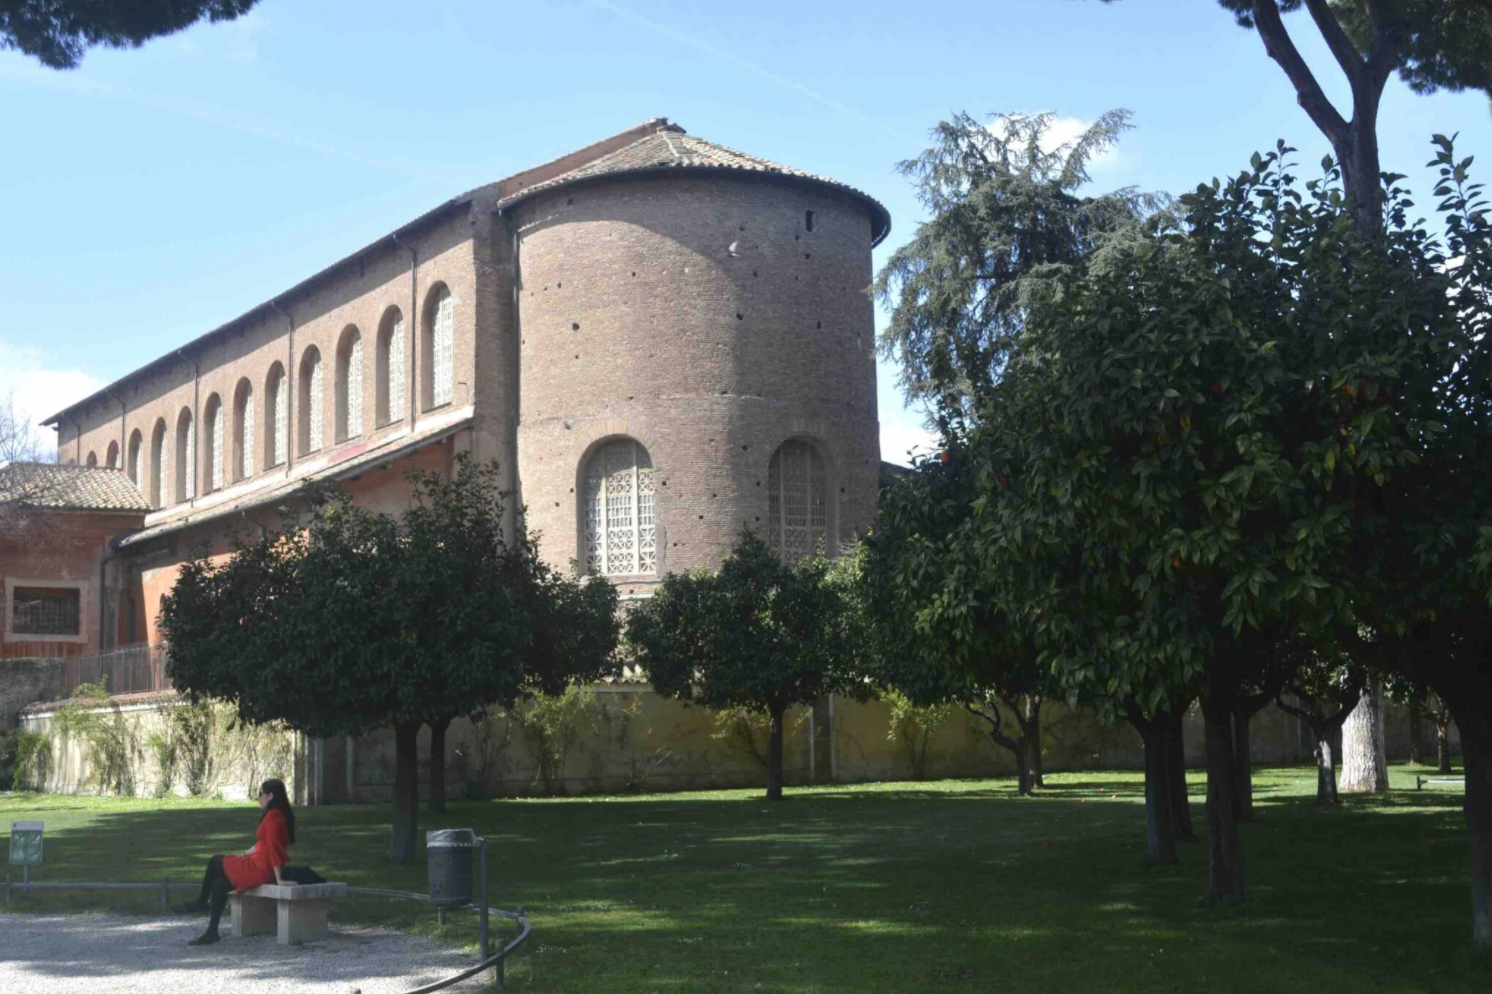 De Basilica di Santa Sabina in Rome.